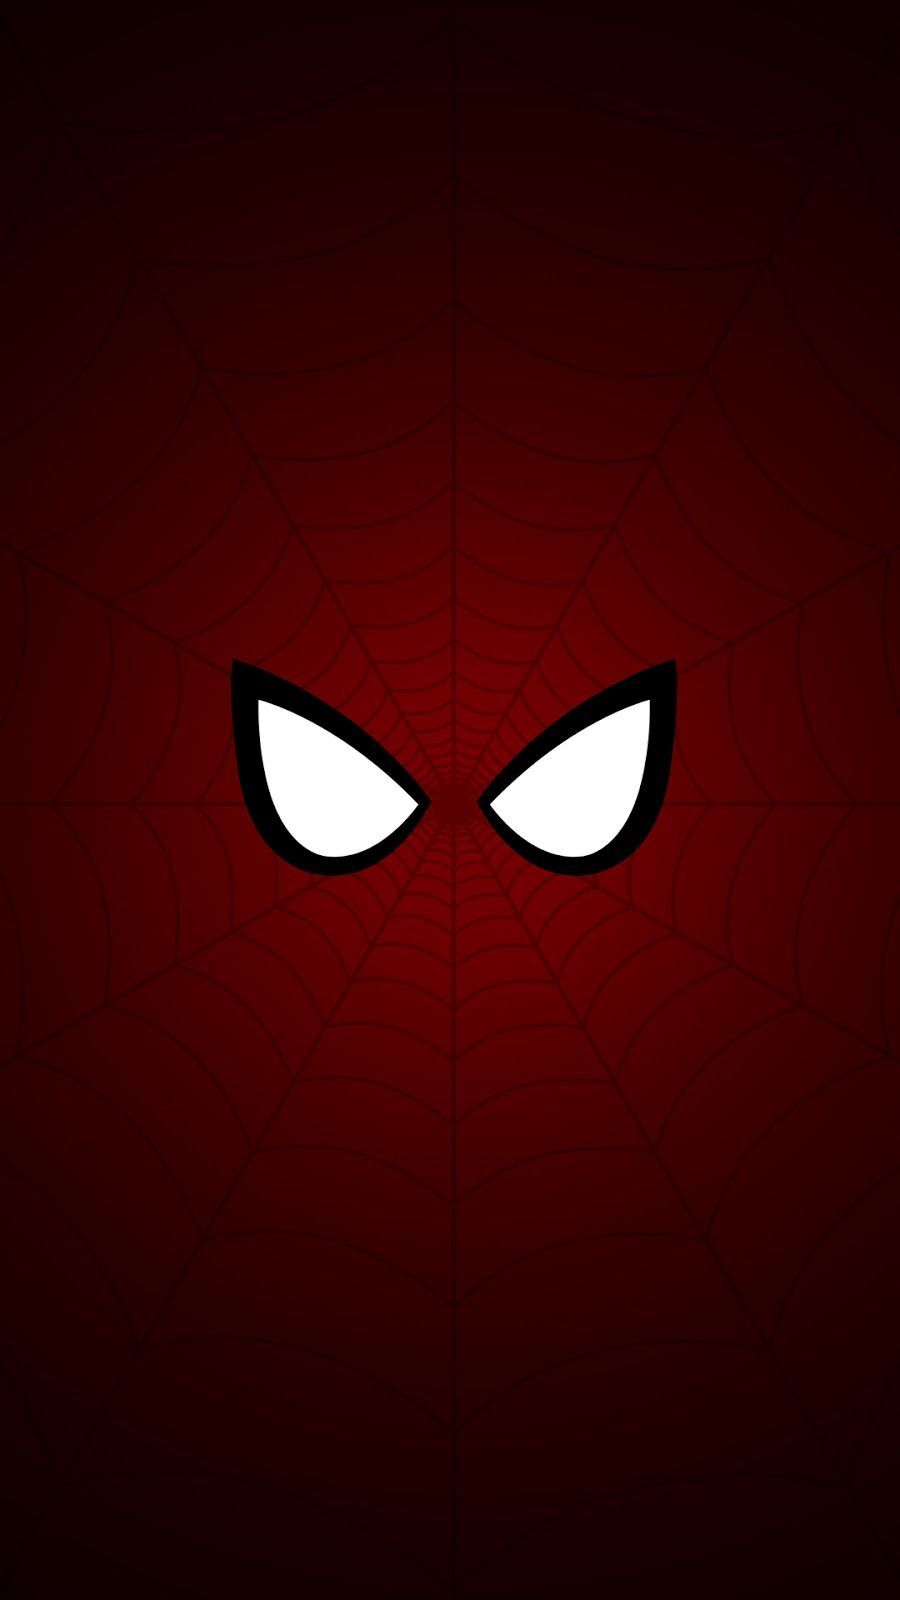 Spiderman iPhone Wallpaper Free Spiderman iPhone Background